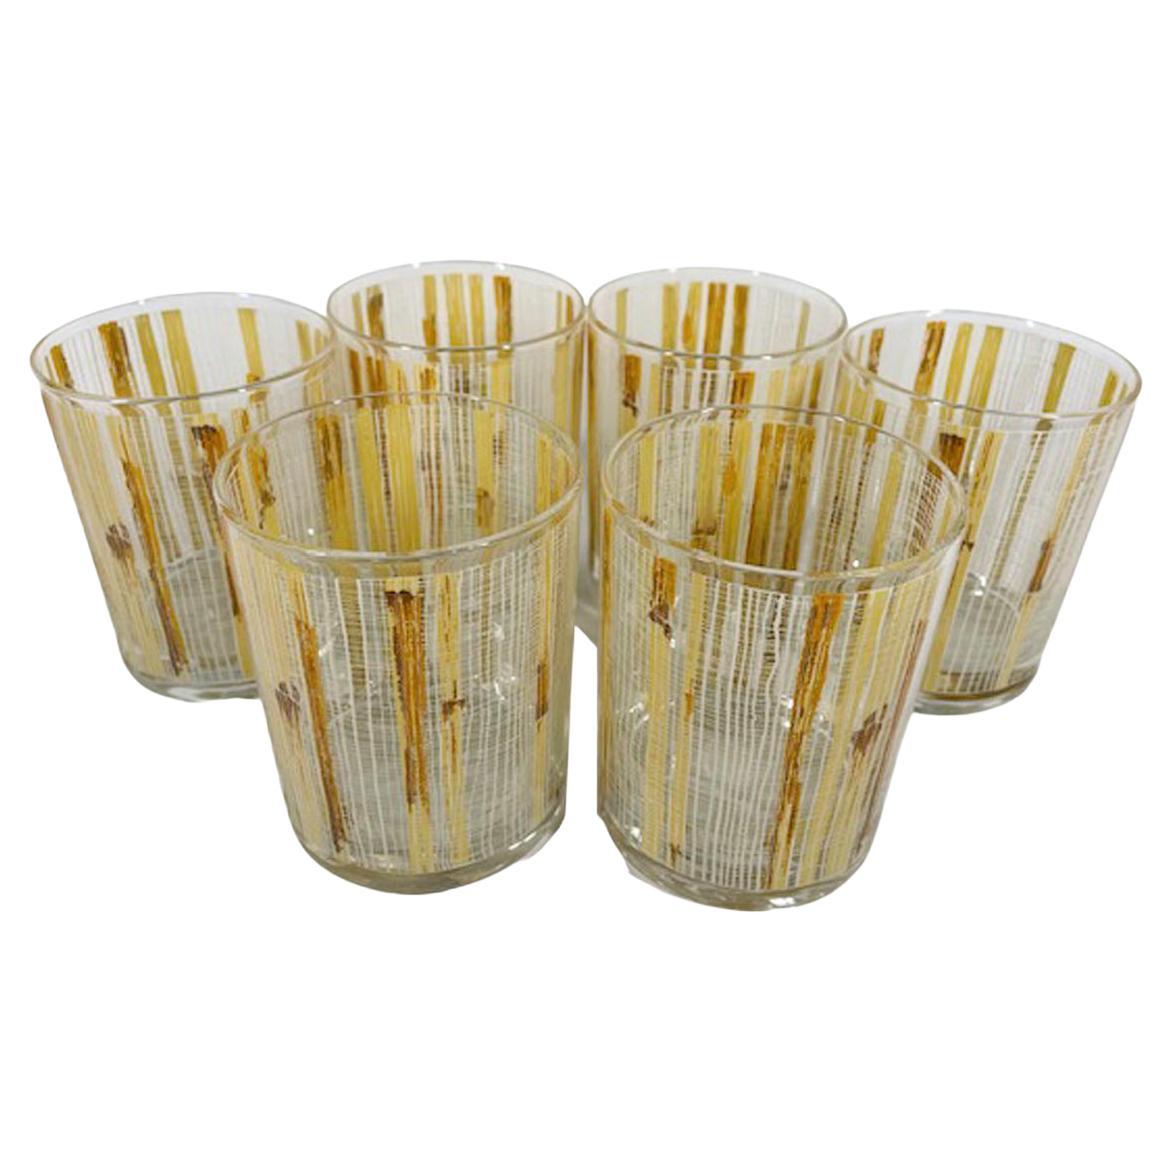 Vintage Cera Glassware for Neiman-Marcus Rocks Glasses in a Bamboo Design